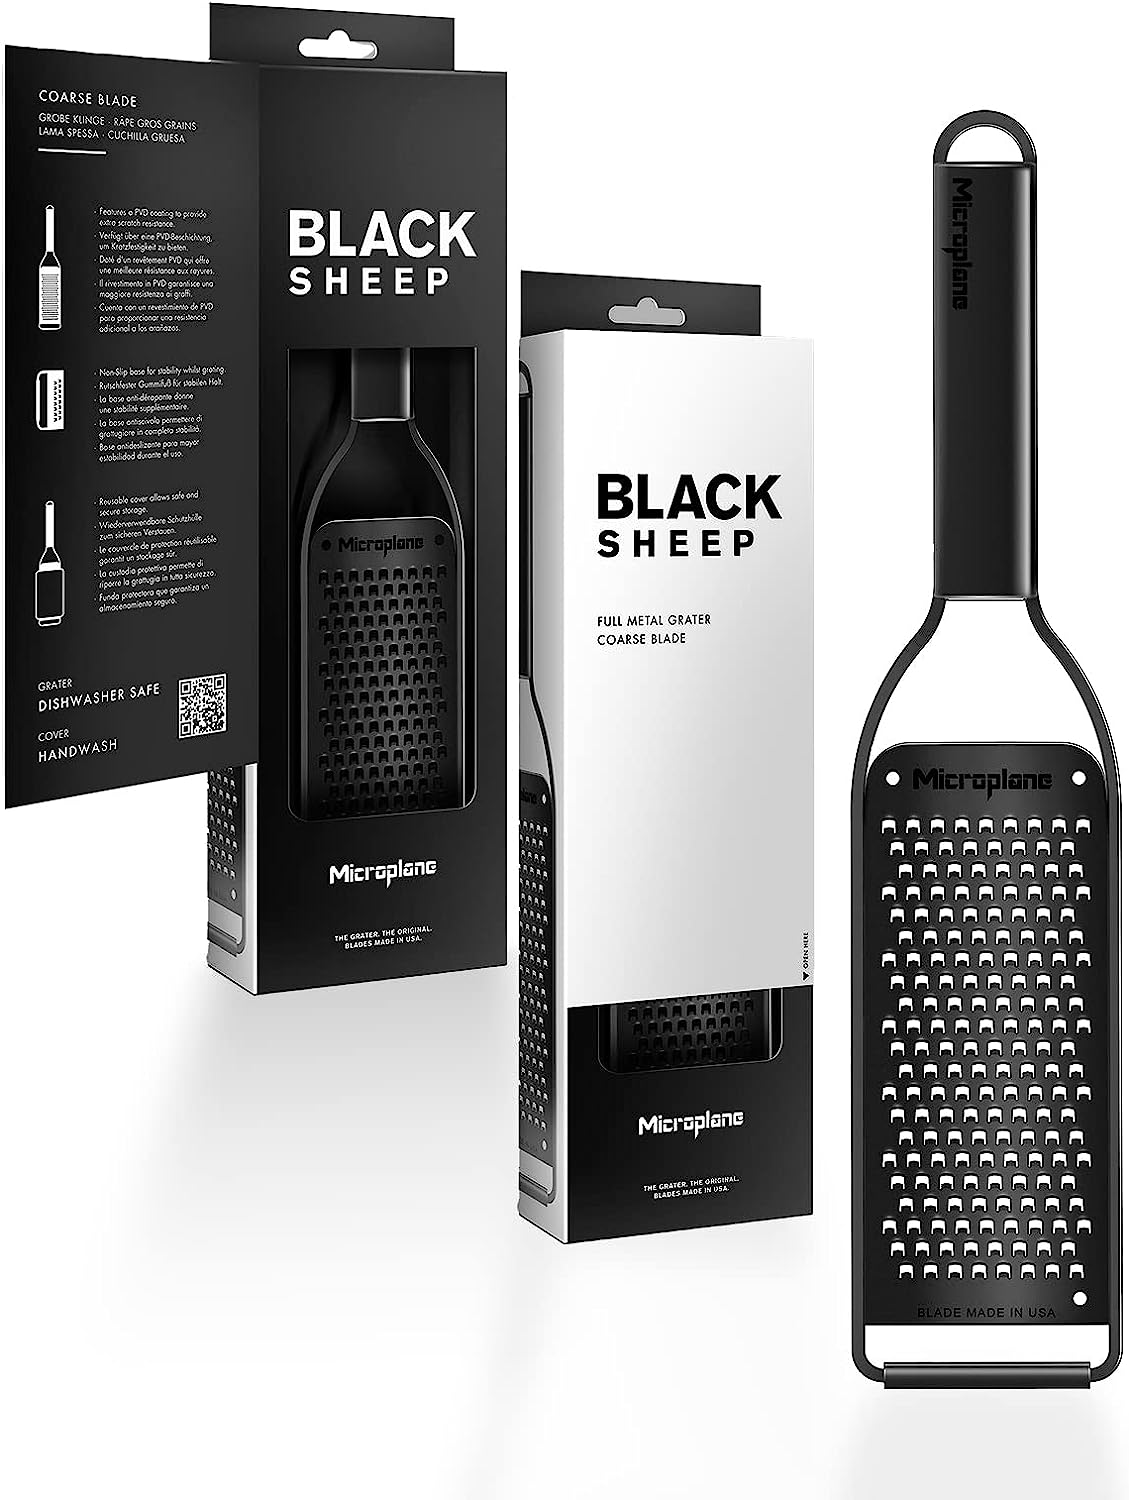 BLACK SHEEP RÂPE